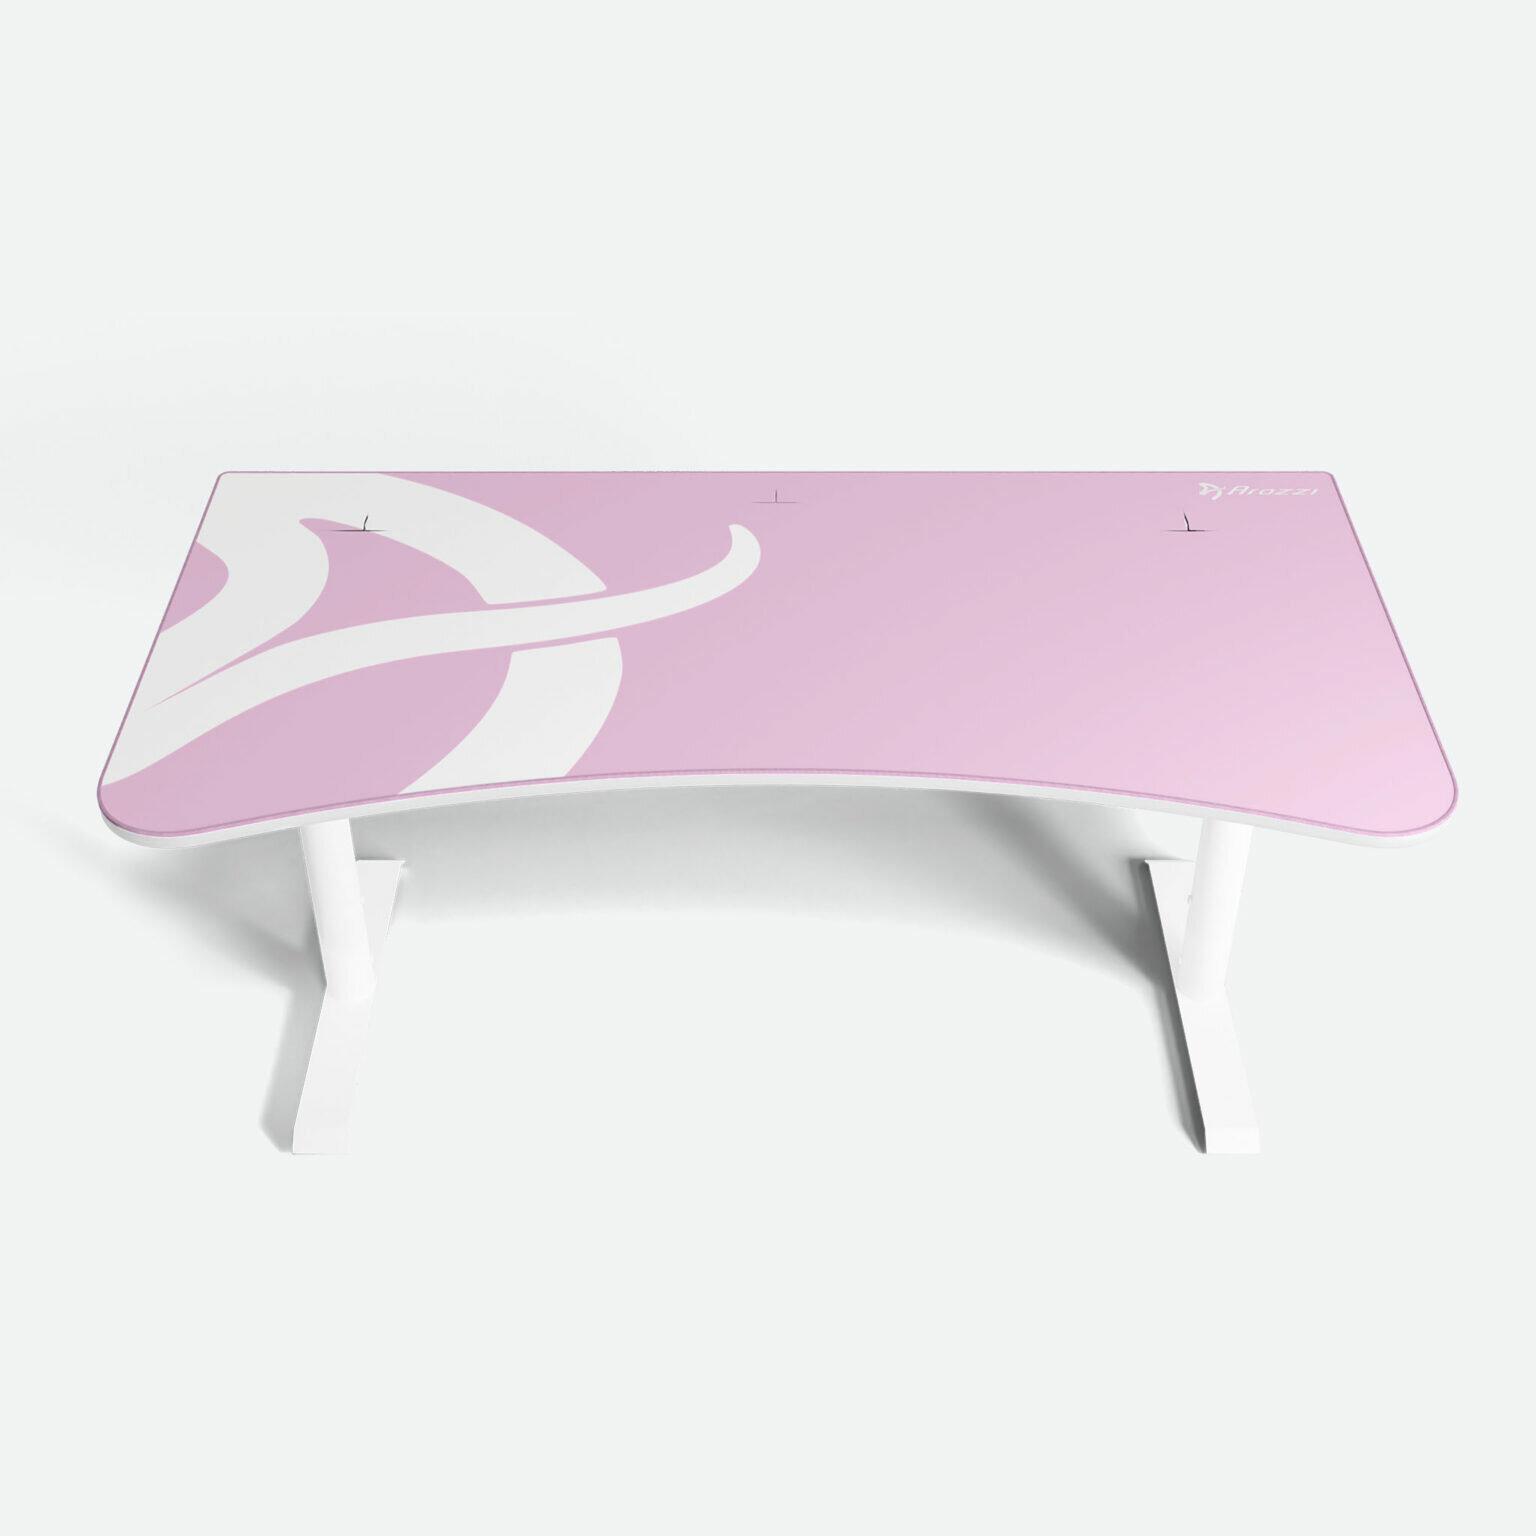 Стол для компьютера Arozzi Arena Gaming Desk - White-Pink